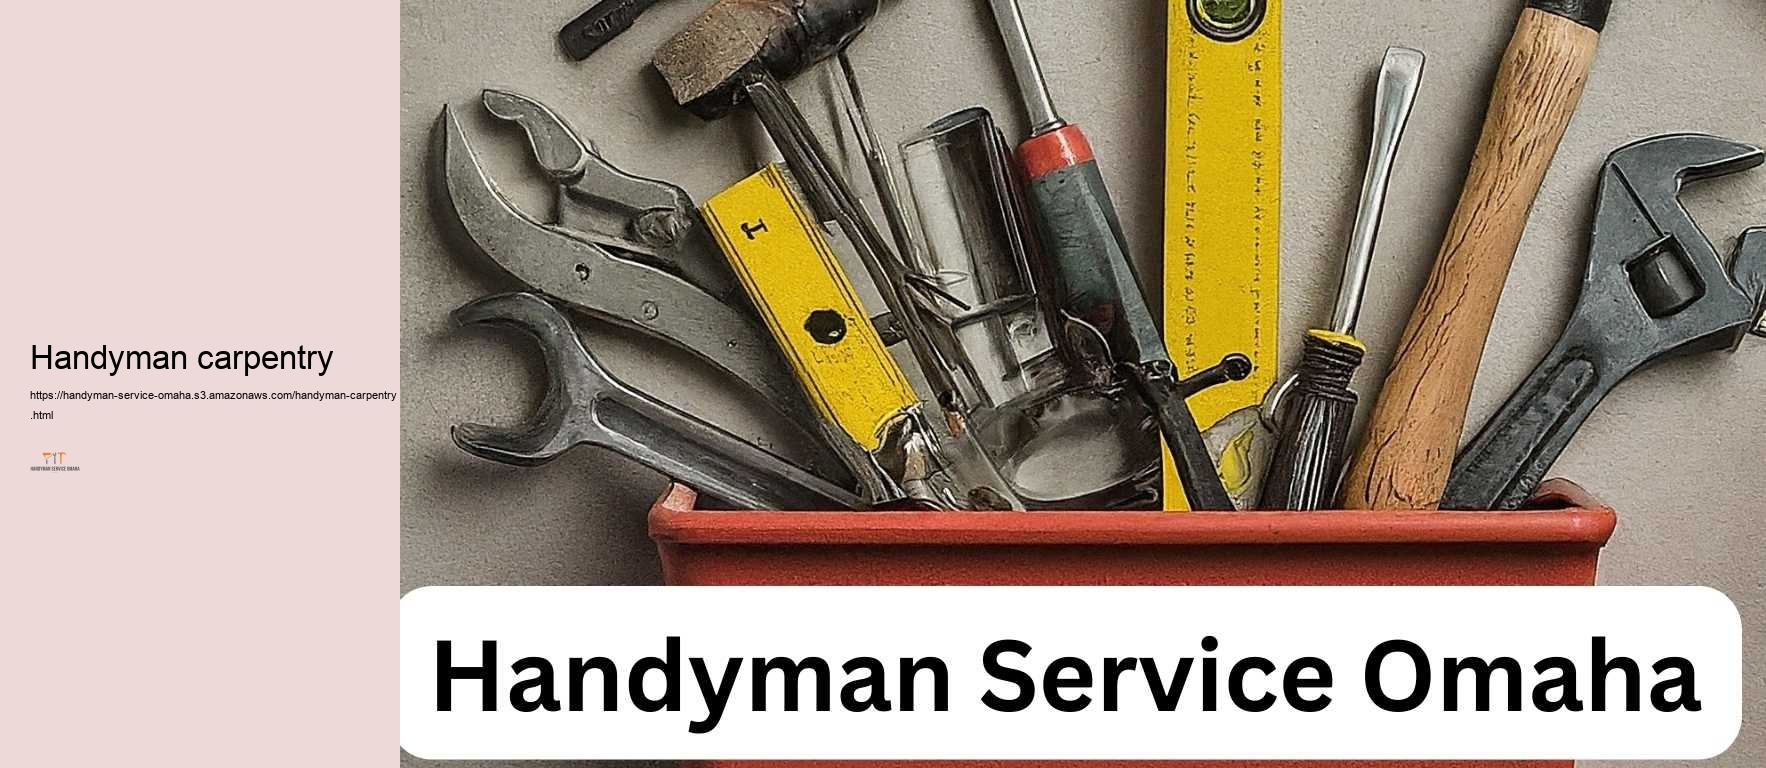 Handyman carpentry